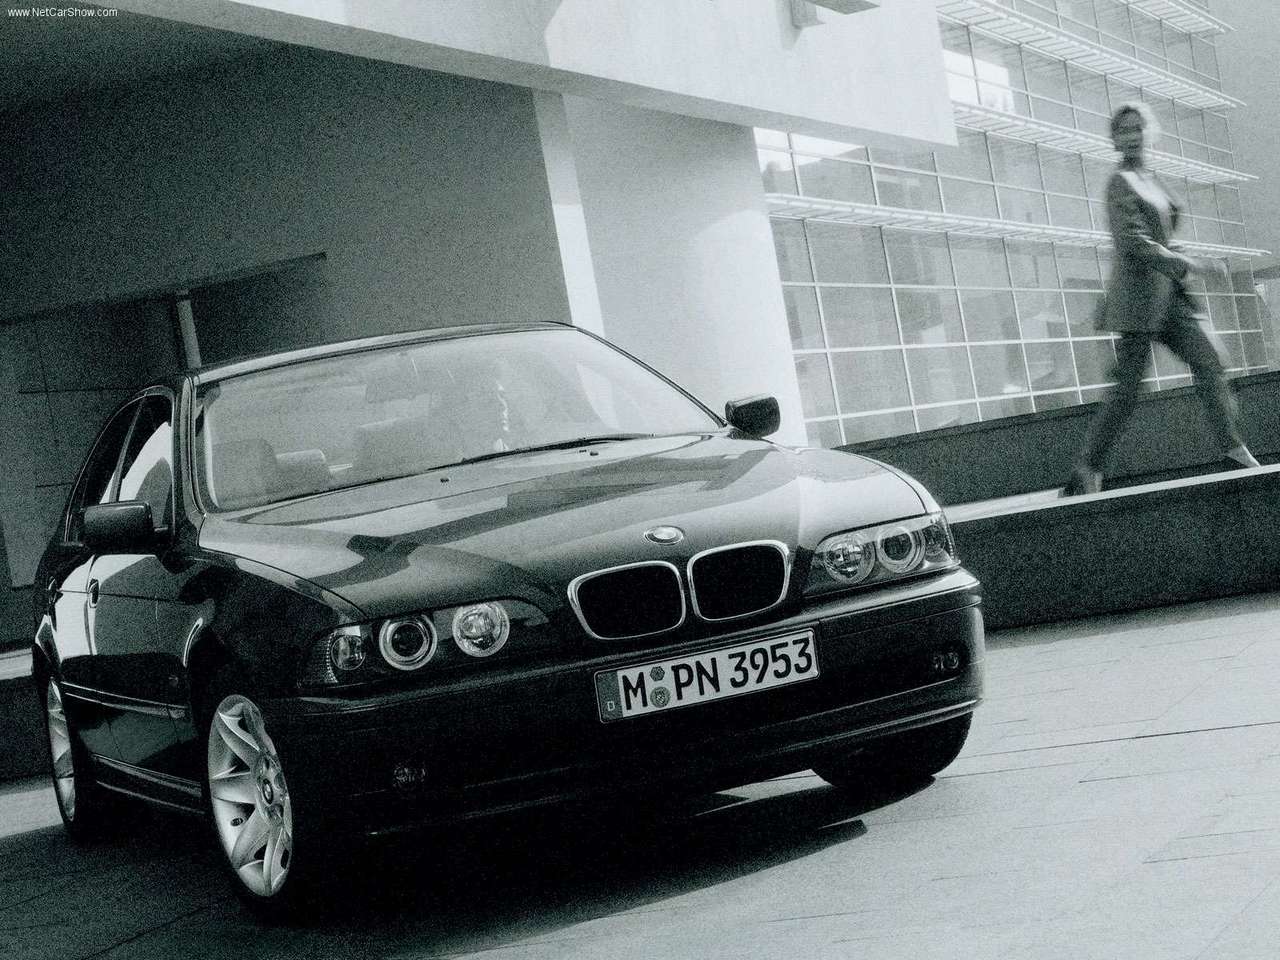 BMW - Populaire français d'automobiles: 2001 BMW 5 Series